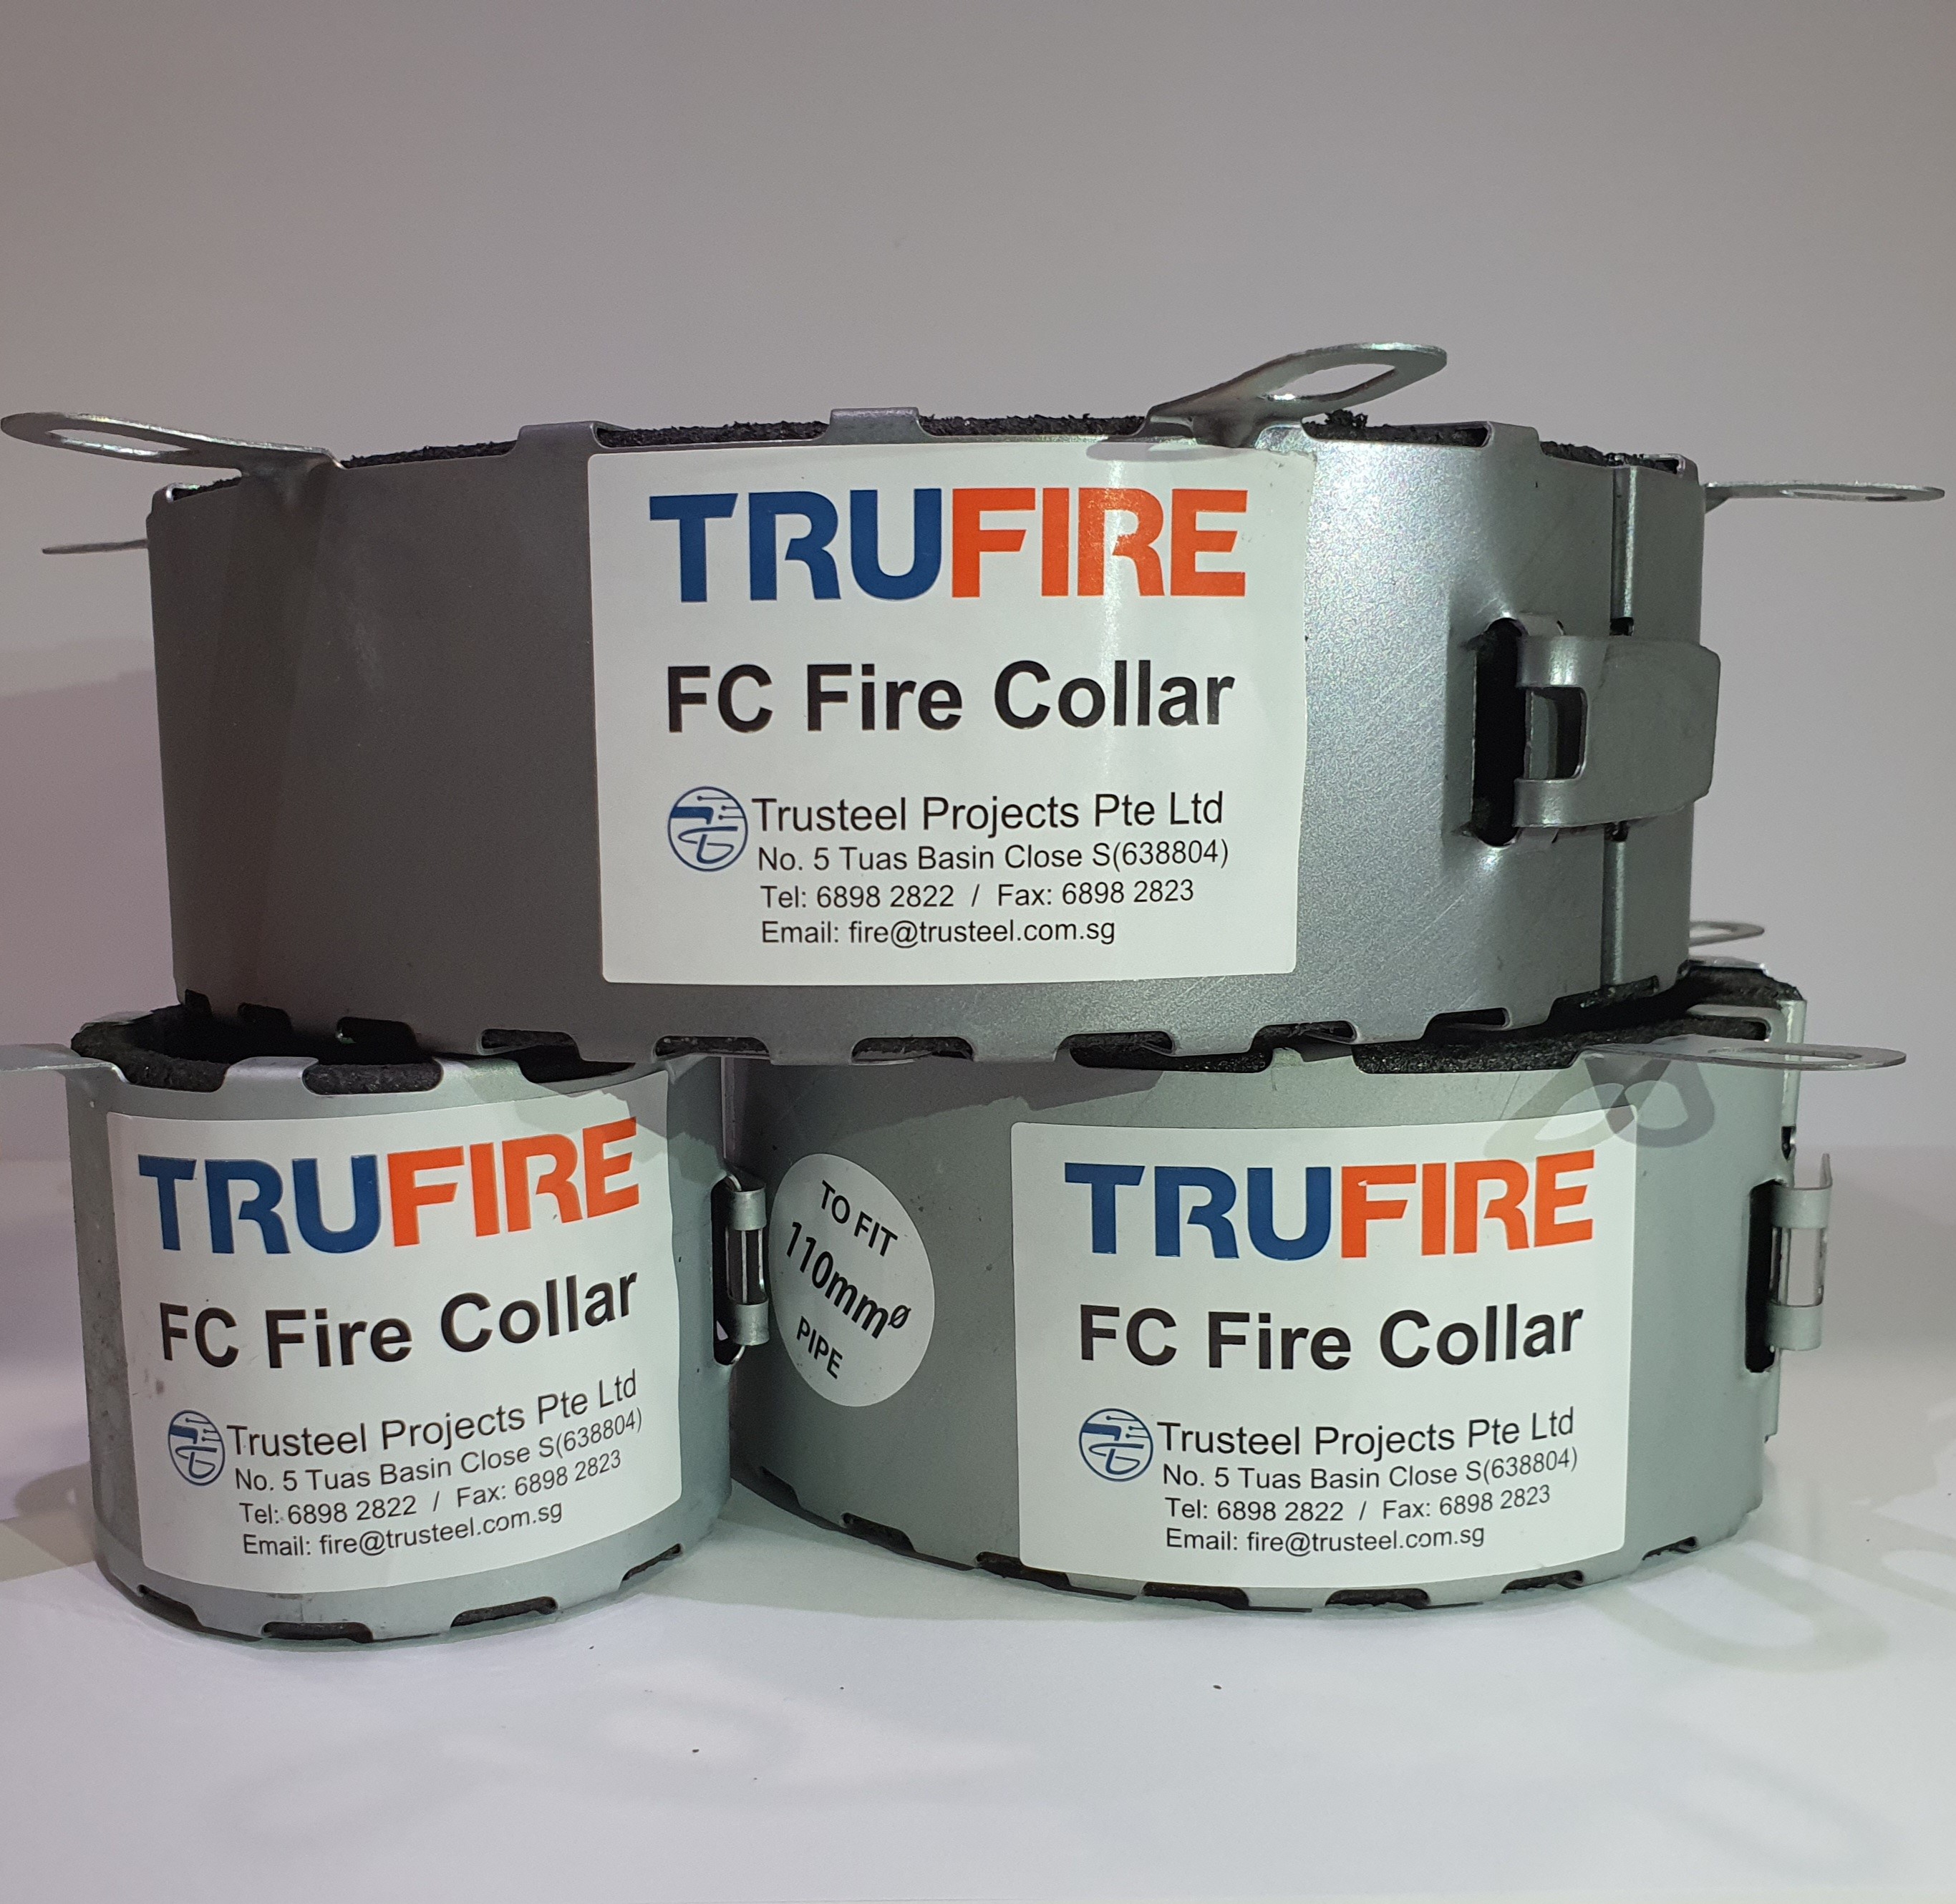 TRUFIRE FC FIRE COLLAR